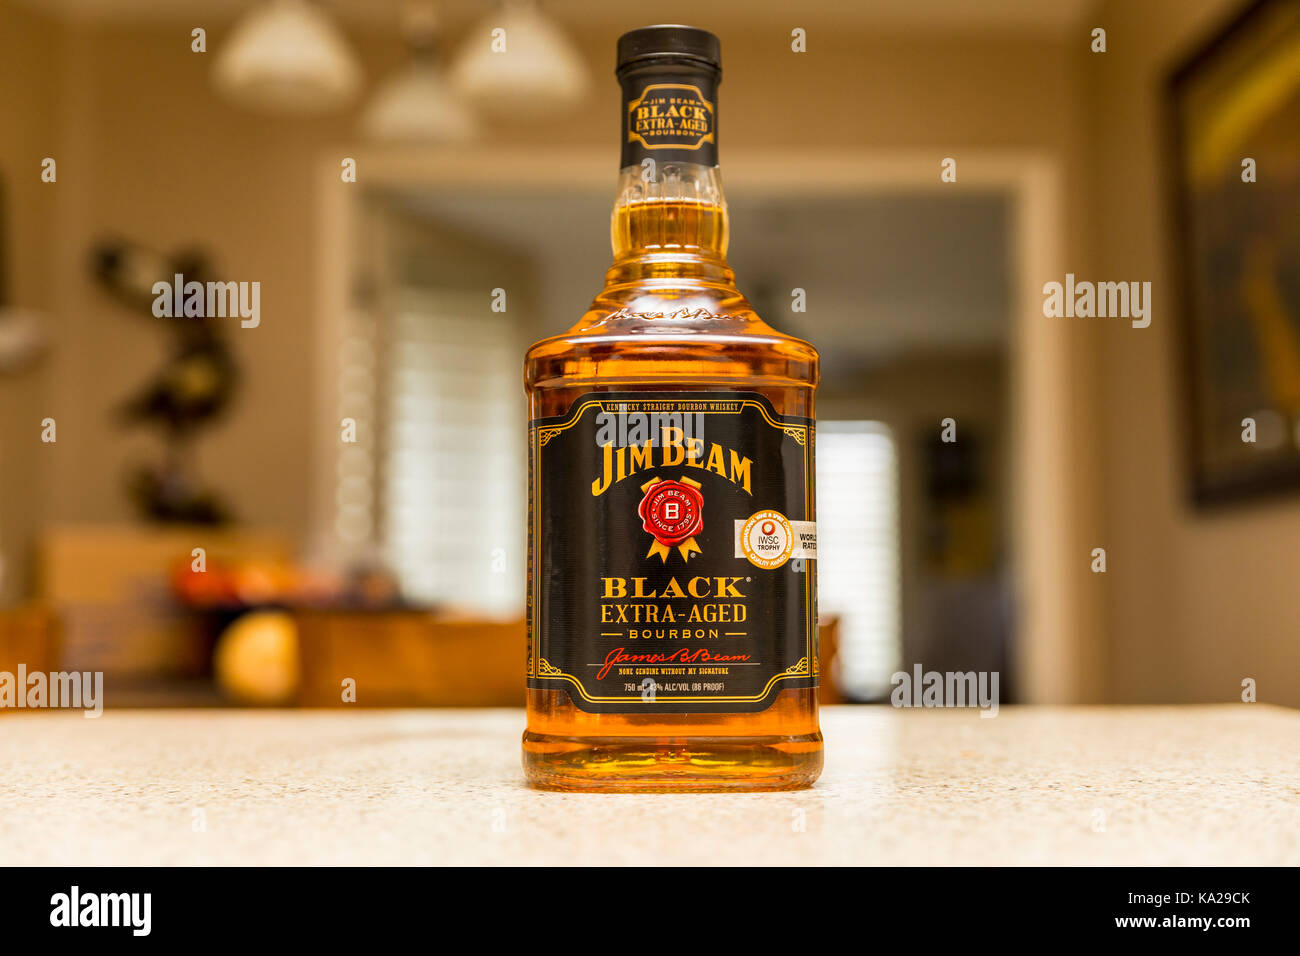 A bottle of Jim Beam Black Extra Aged Bourbon Whiskey Stock Photo - Alamy